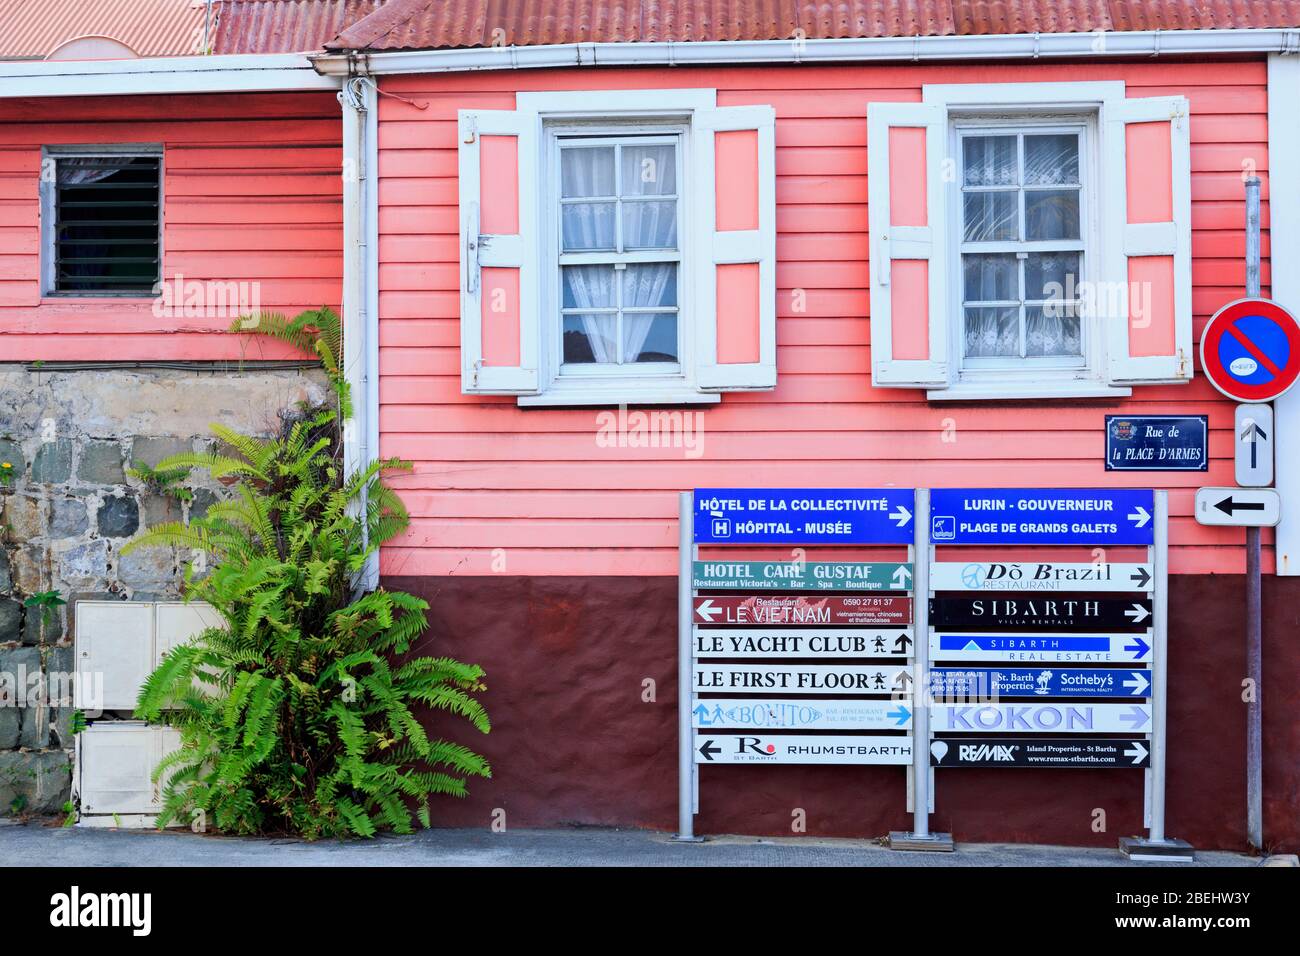 Wooden cottage in Gustavia,Saint Barts,Caribbean Stock Photo